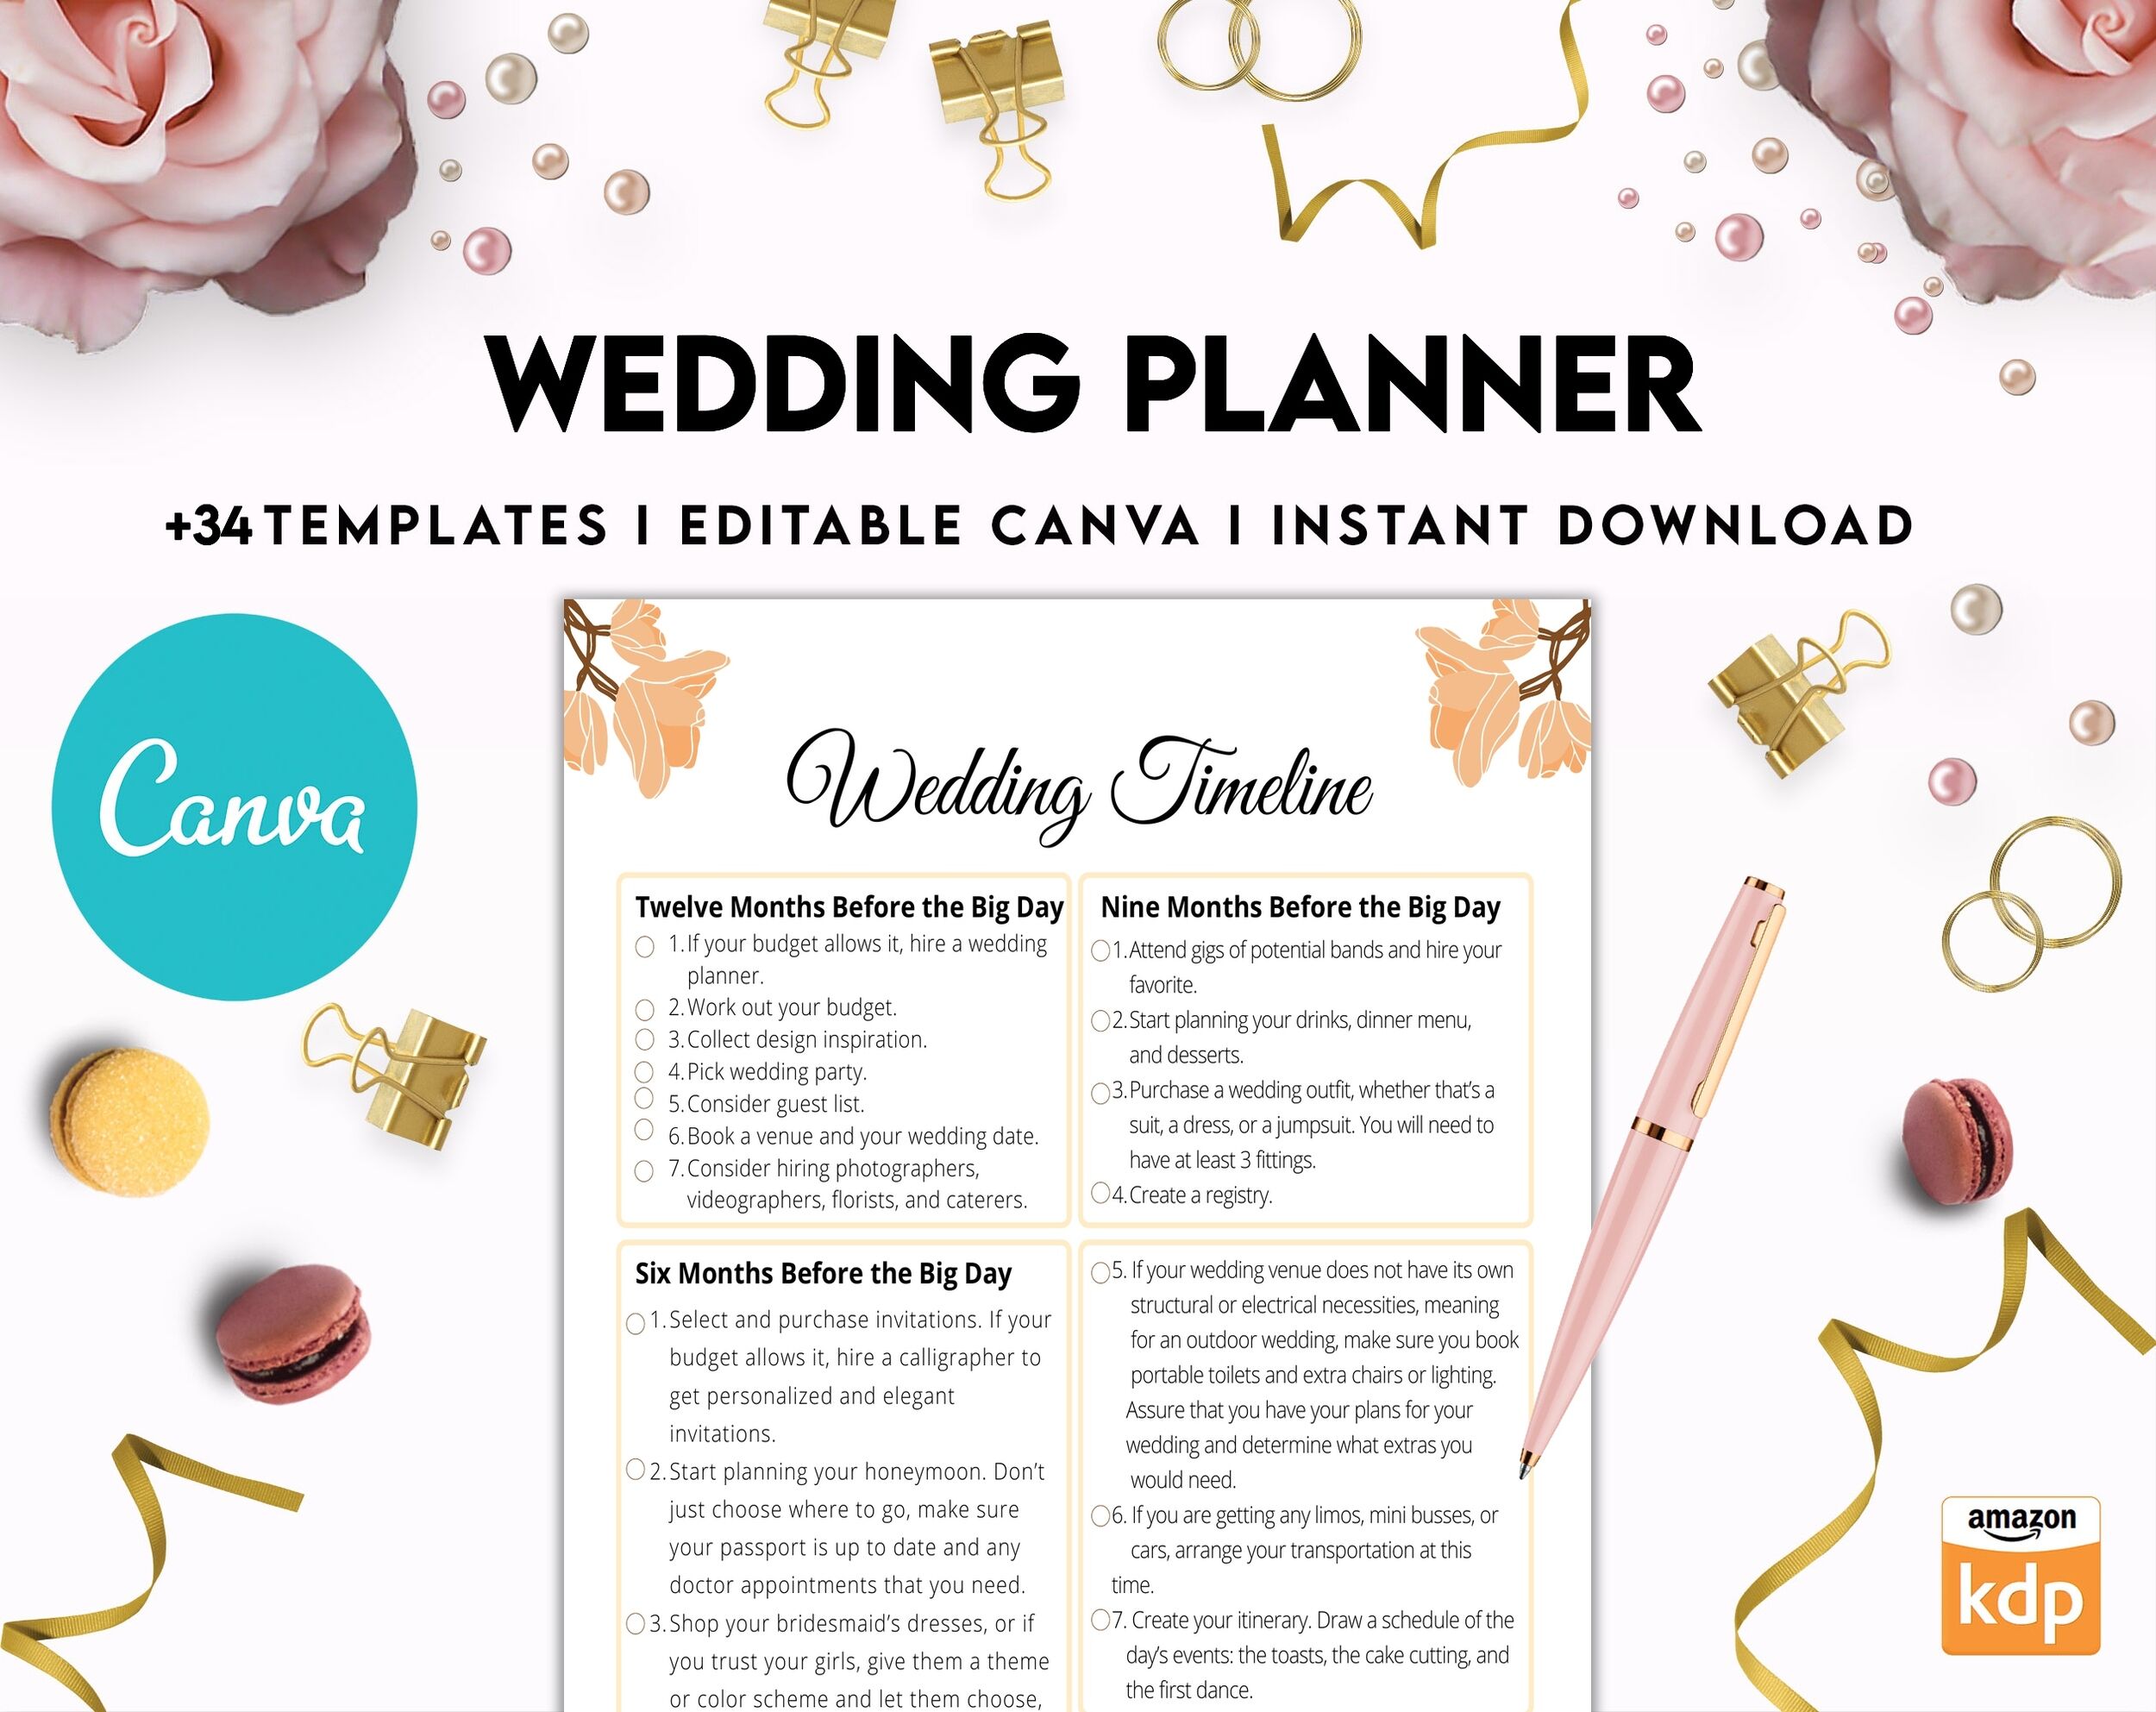 Wedding Planner Template